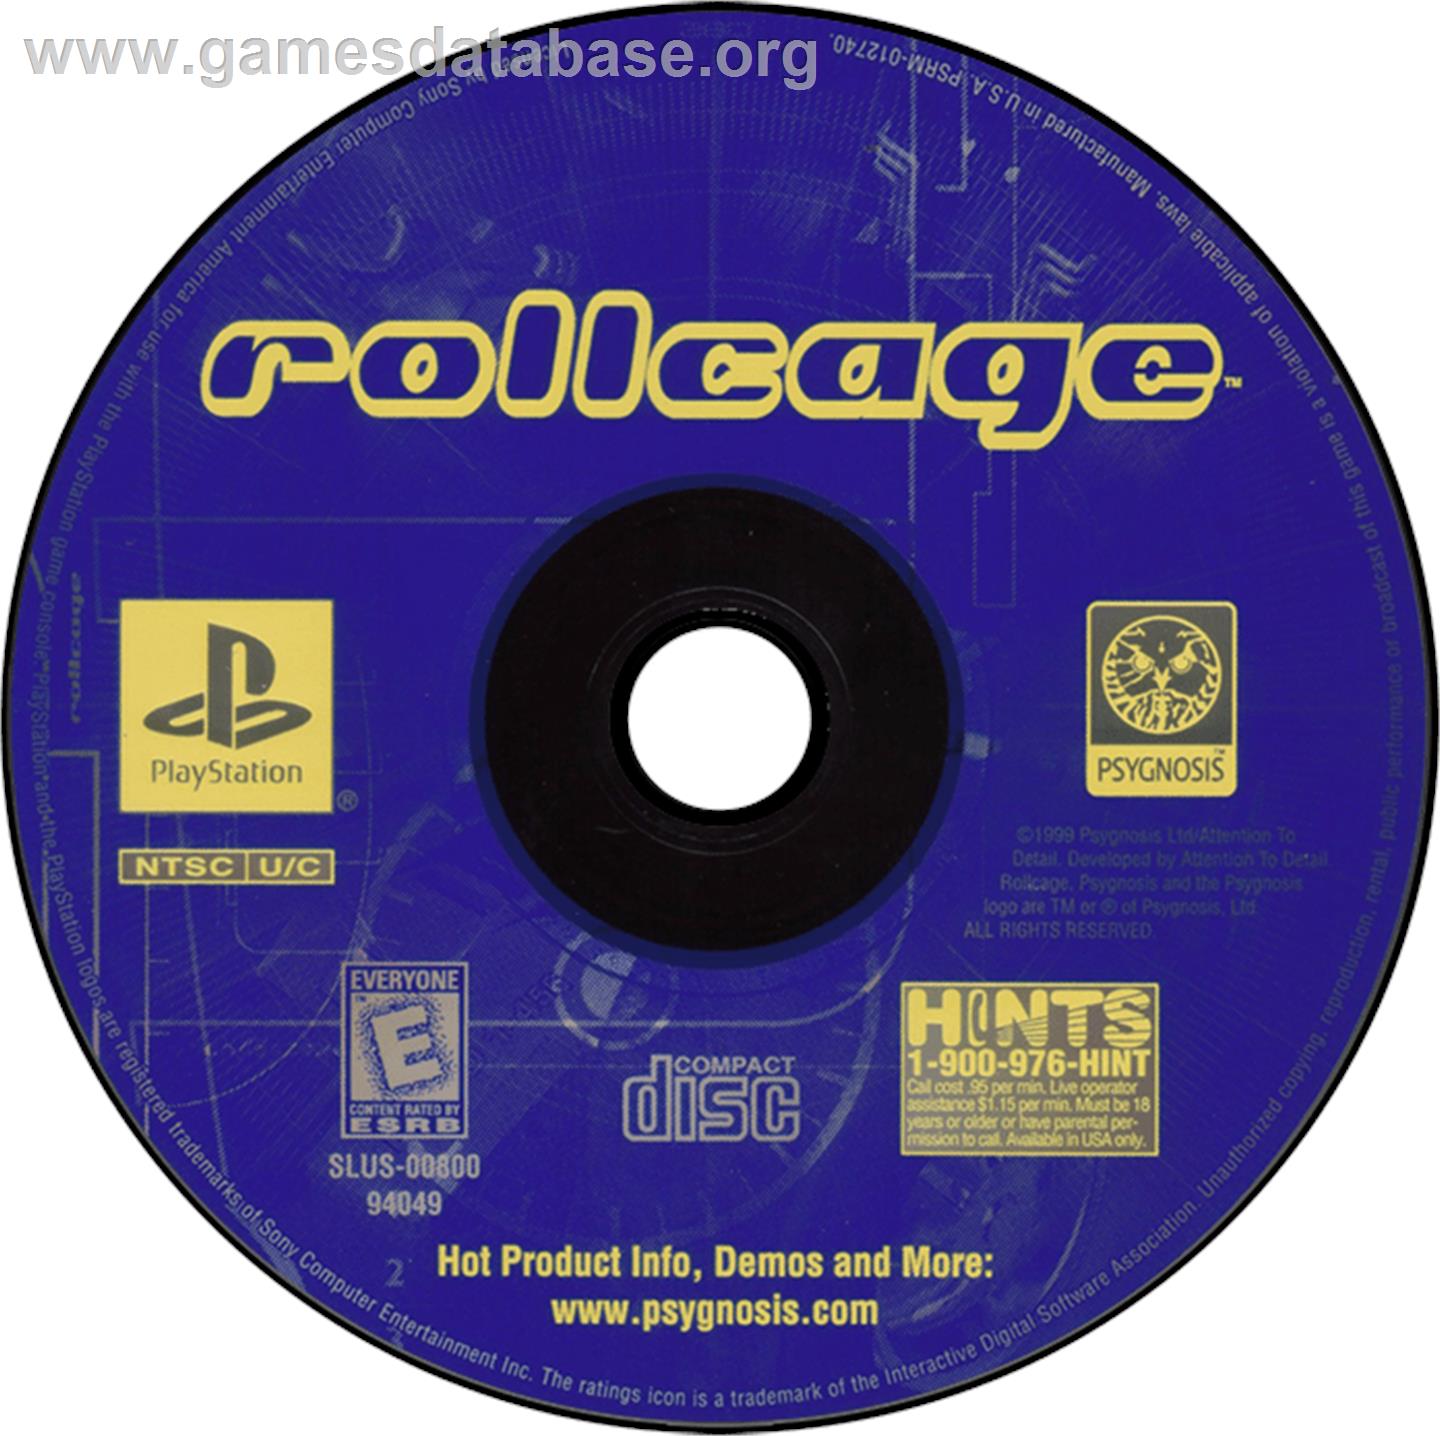 Rollcage: Limited Edition - Sony Playstation - Artwork - Disc